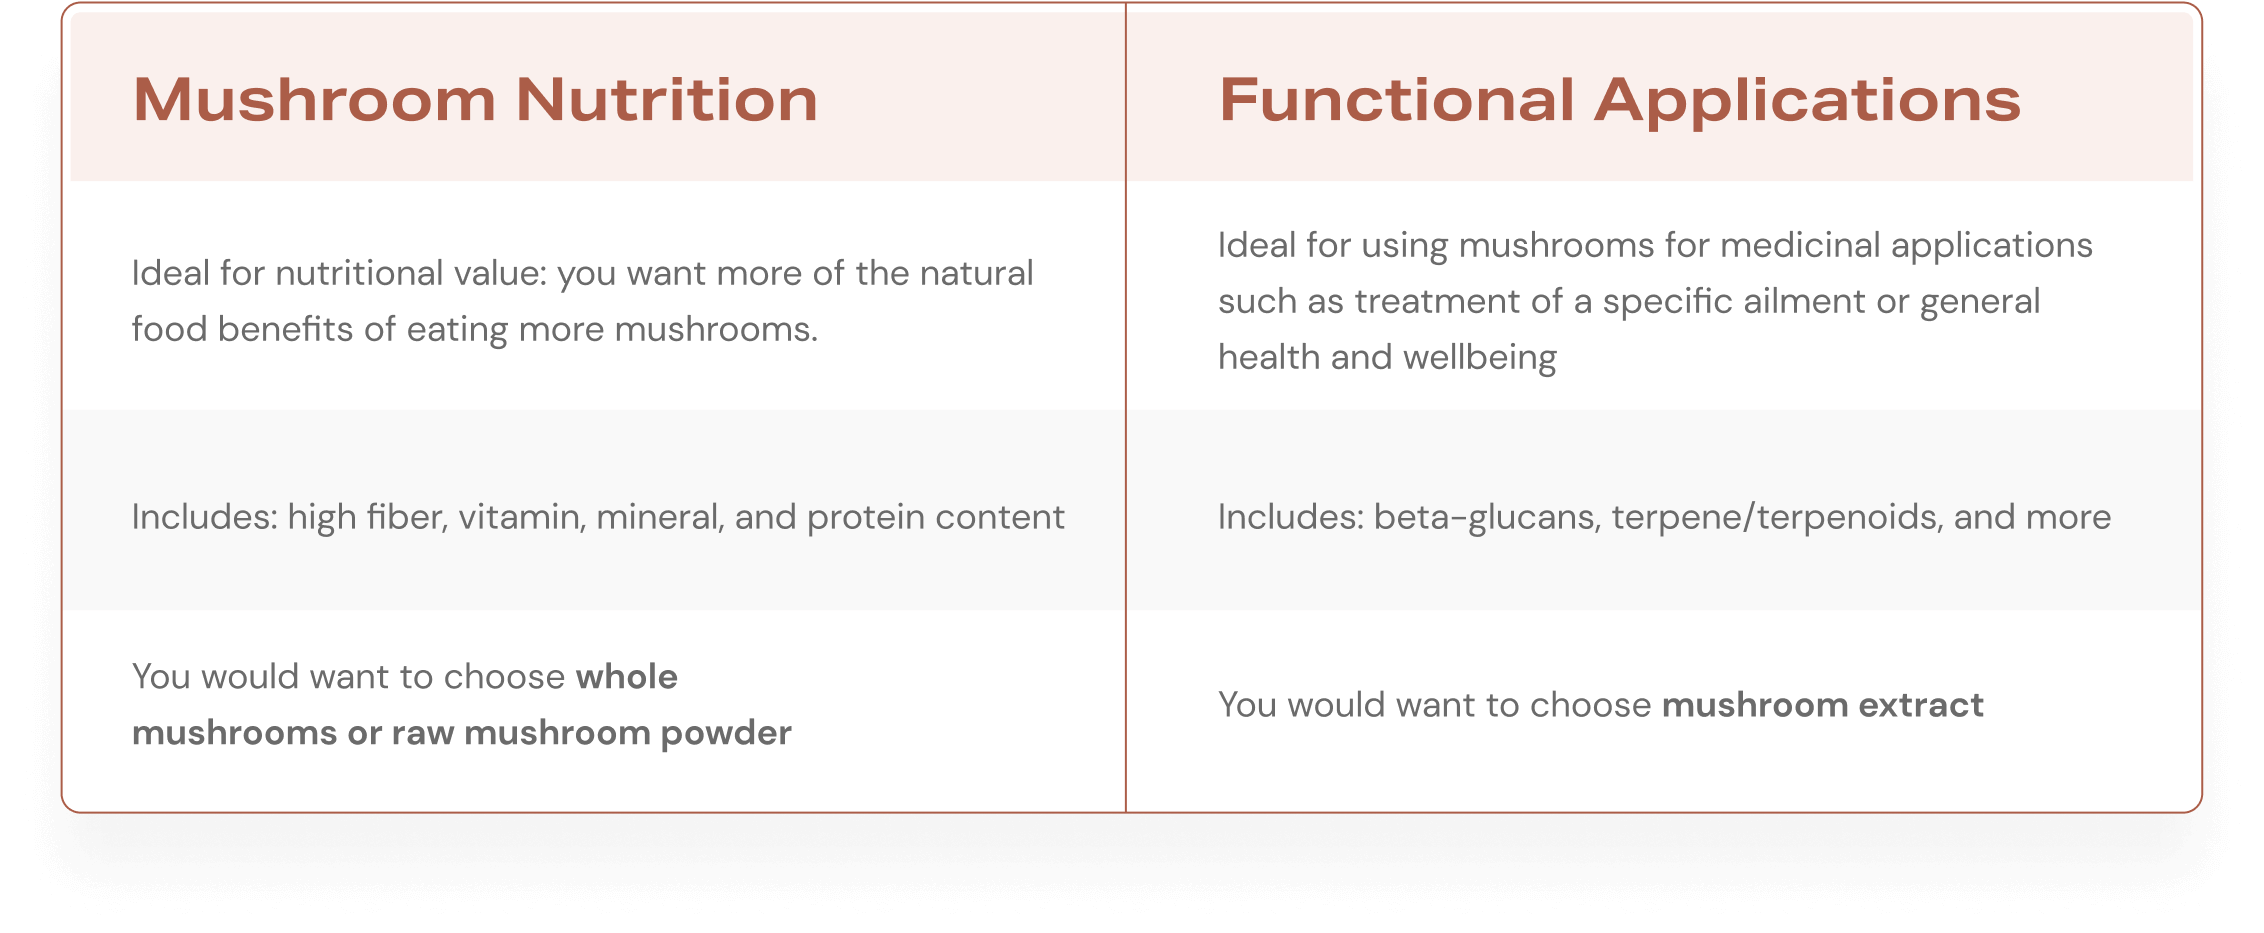 Mush Nutrition vs. Functional Applications